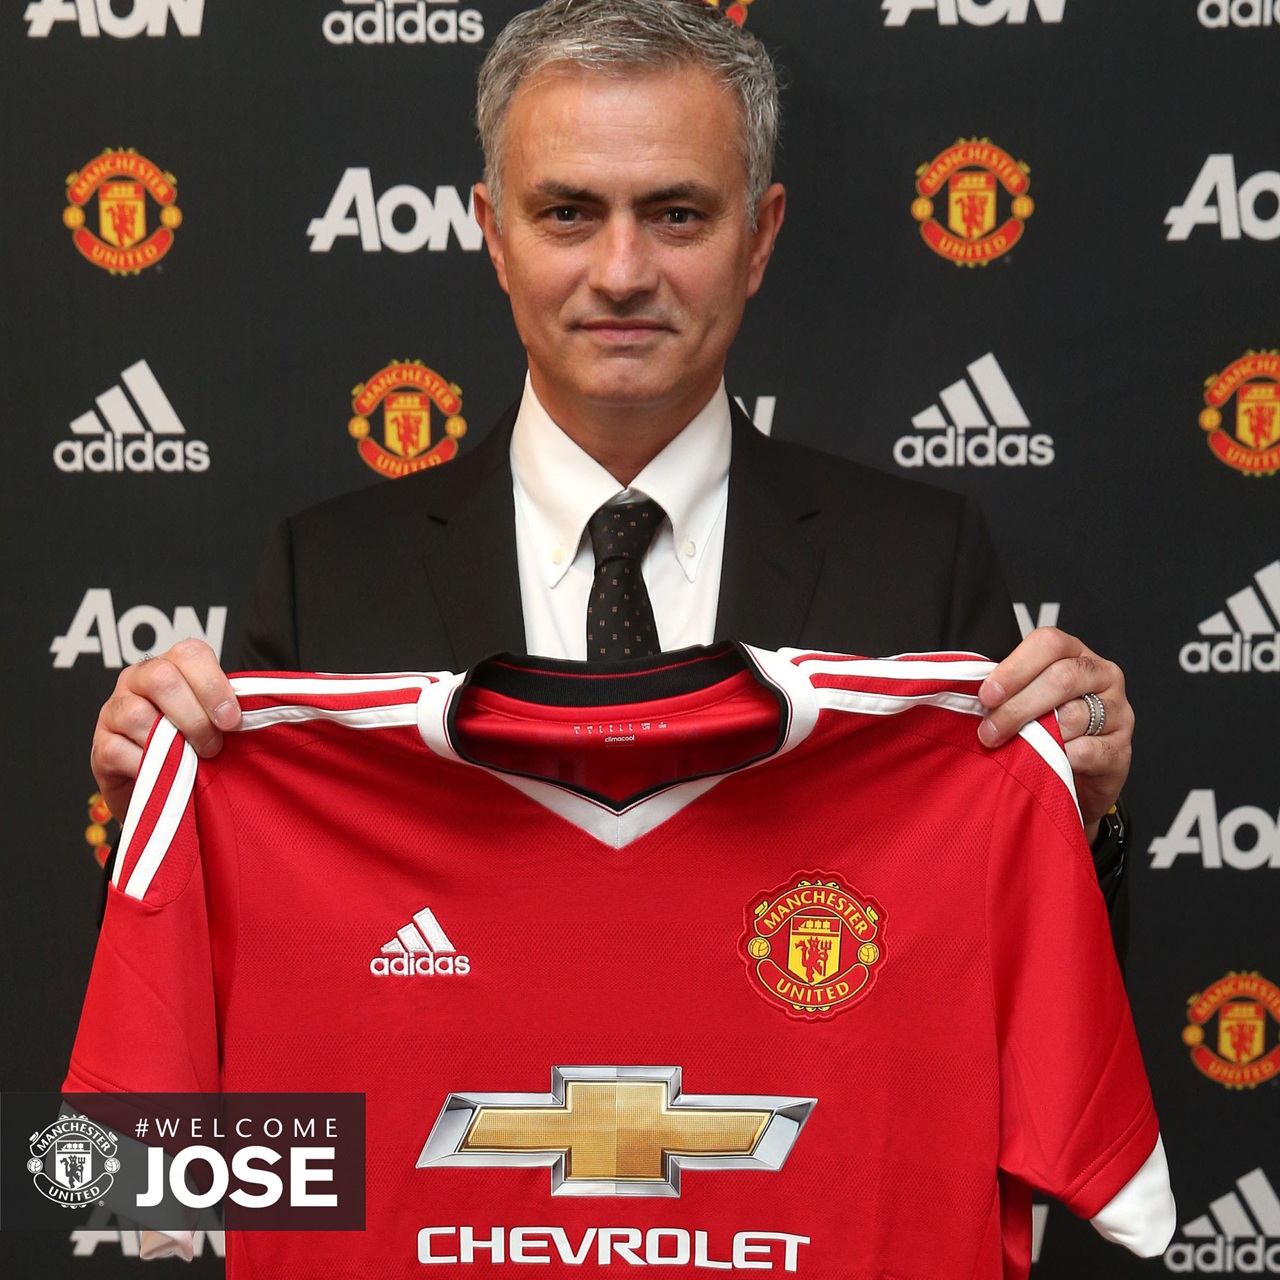 Jose Mourinho (Photo Credit: Manchester United FC)